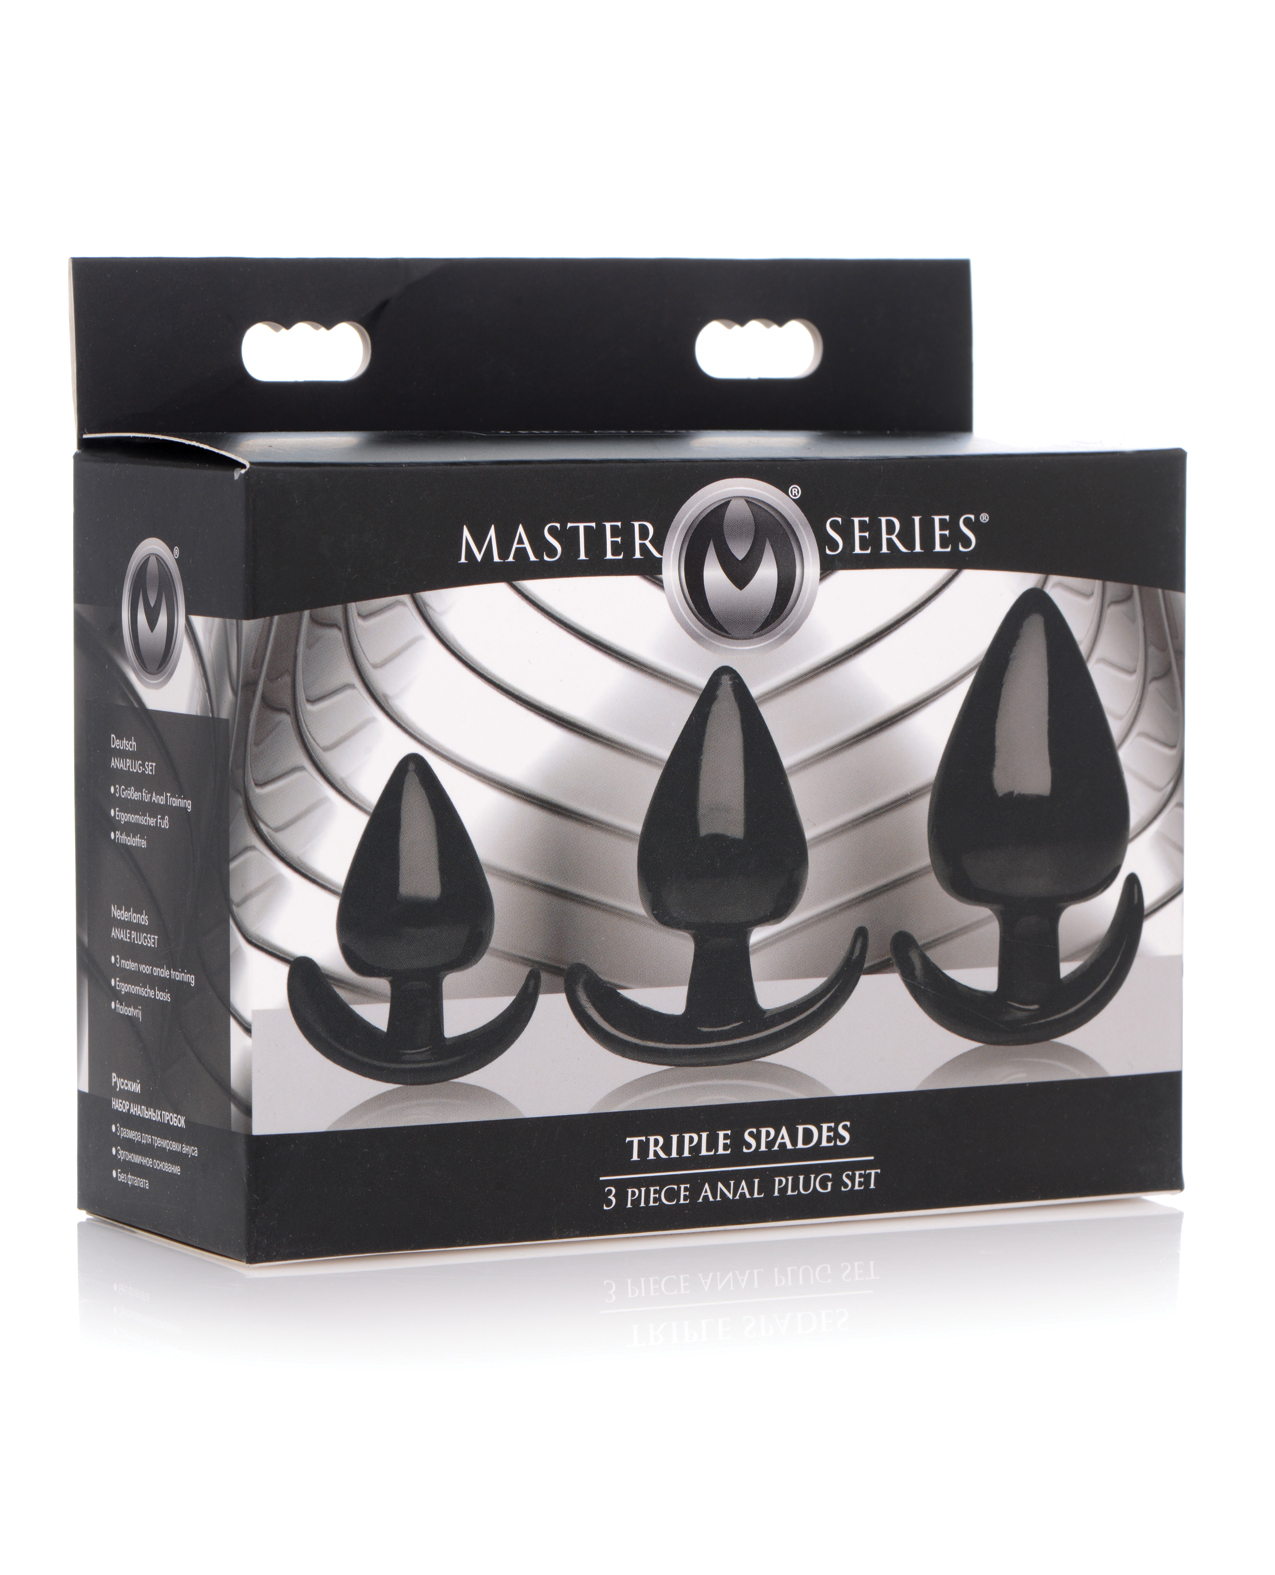 Master Series Triple Spades Anal Plug Set - 3 pc - Caliente Adult.